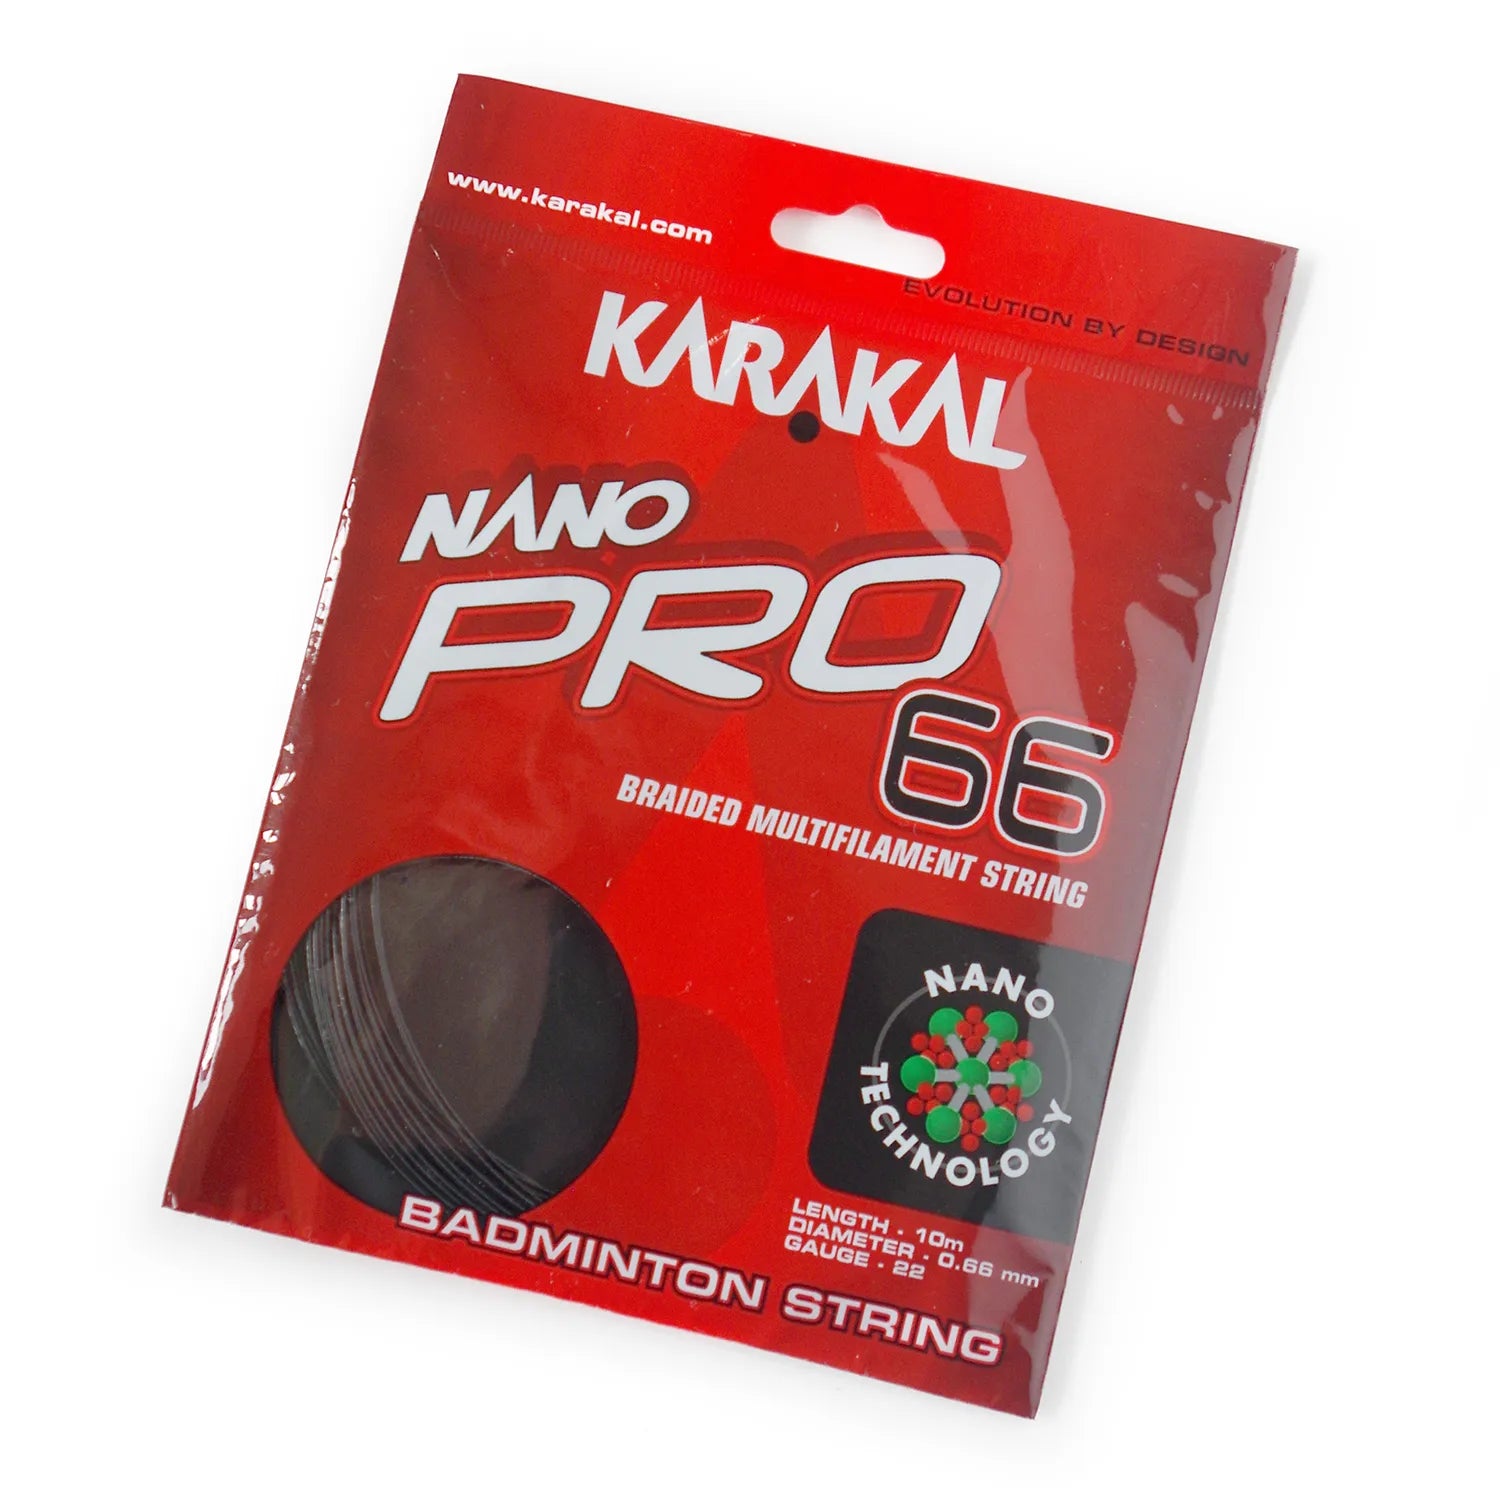 Karakal Nano Pro 66 Badminton String